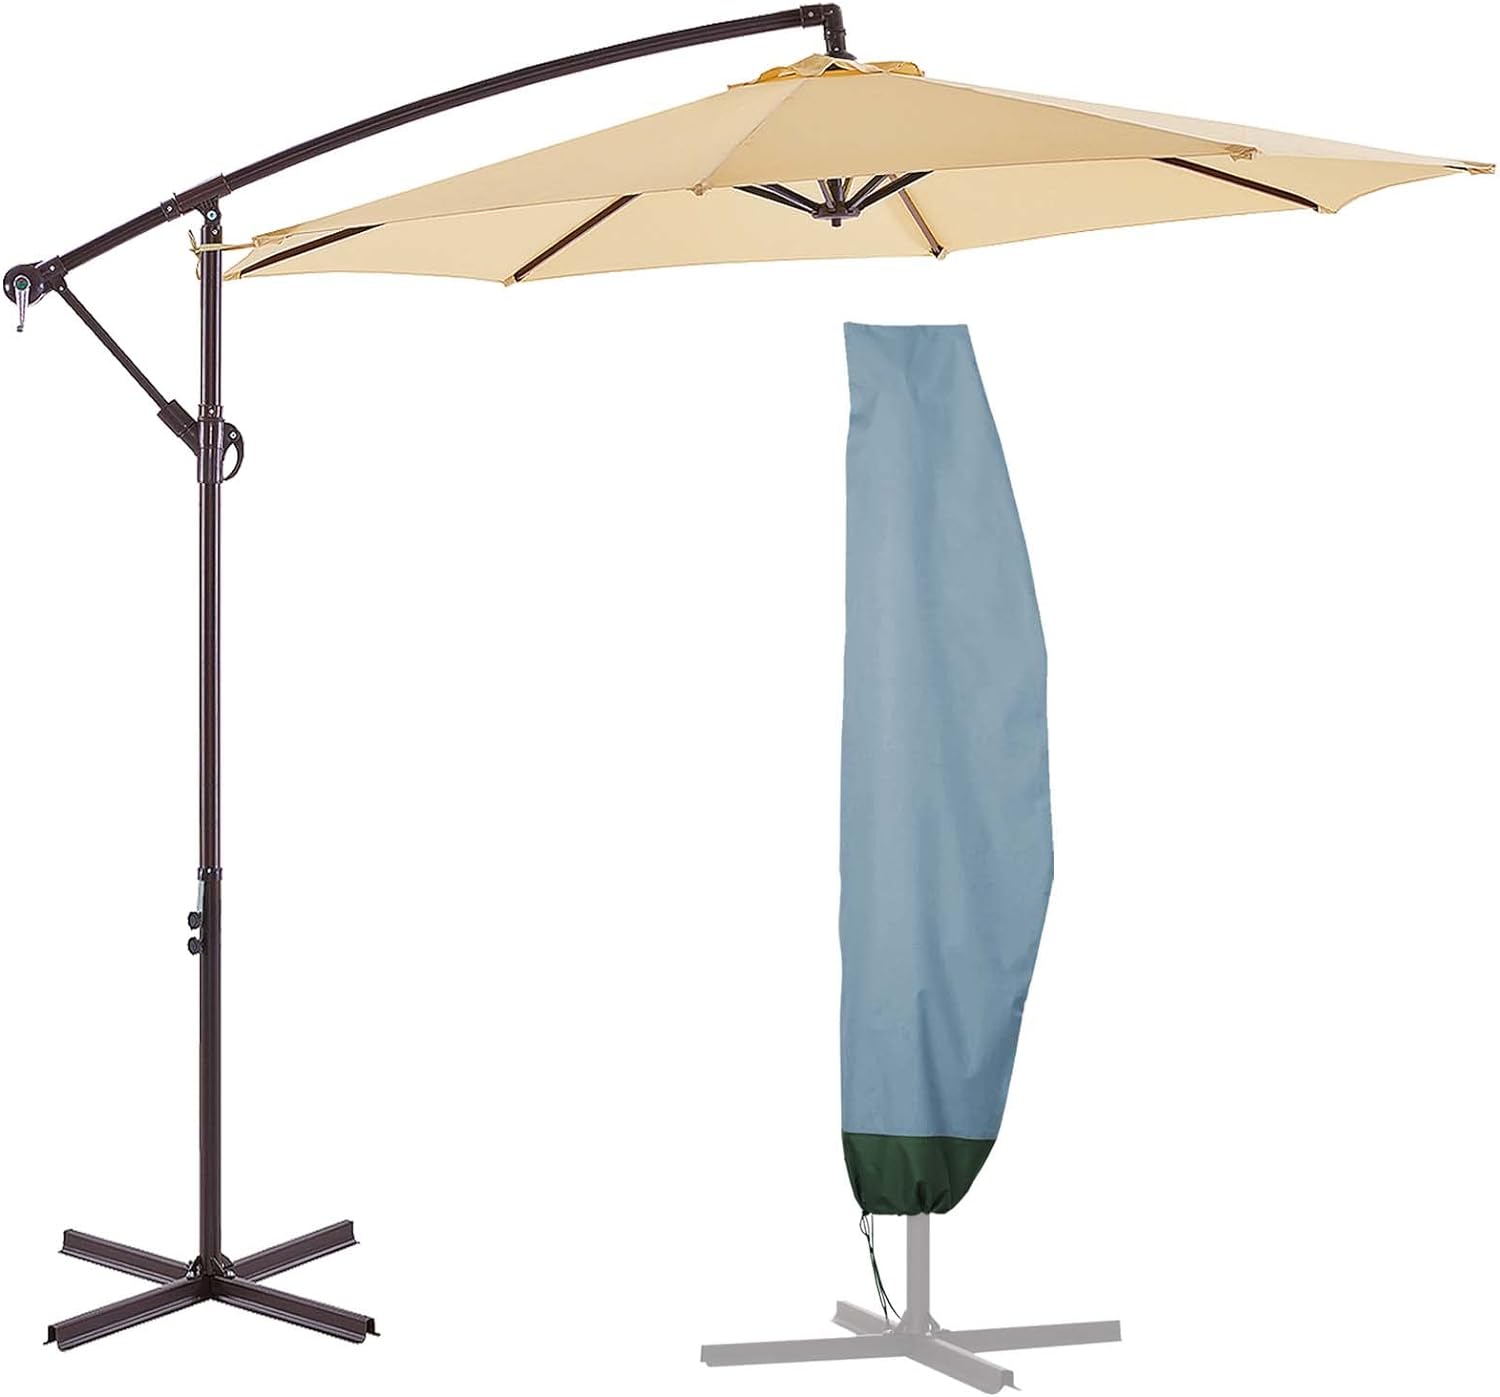 wikiwiki 10FT Patio Offset Umbrella Outdoor Cantilever Umbrella Hanging Umbrellas with Weighted Base, Market Patio Umbrella for Backyard, Garden & Deck